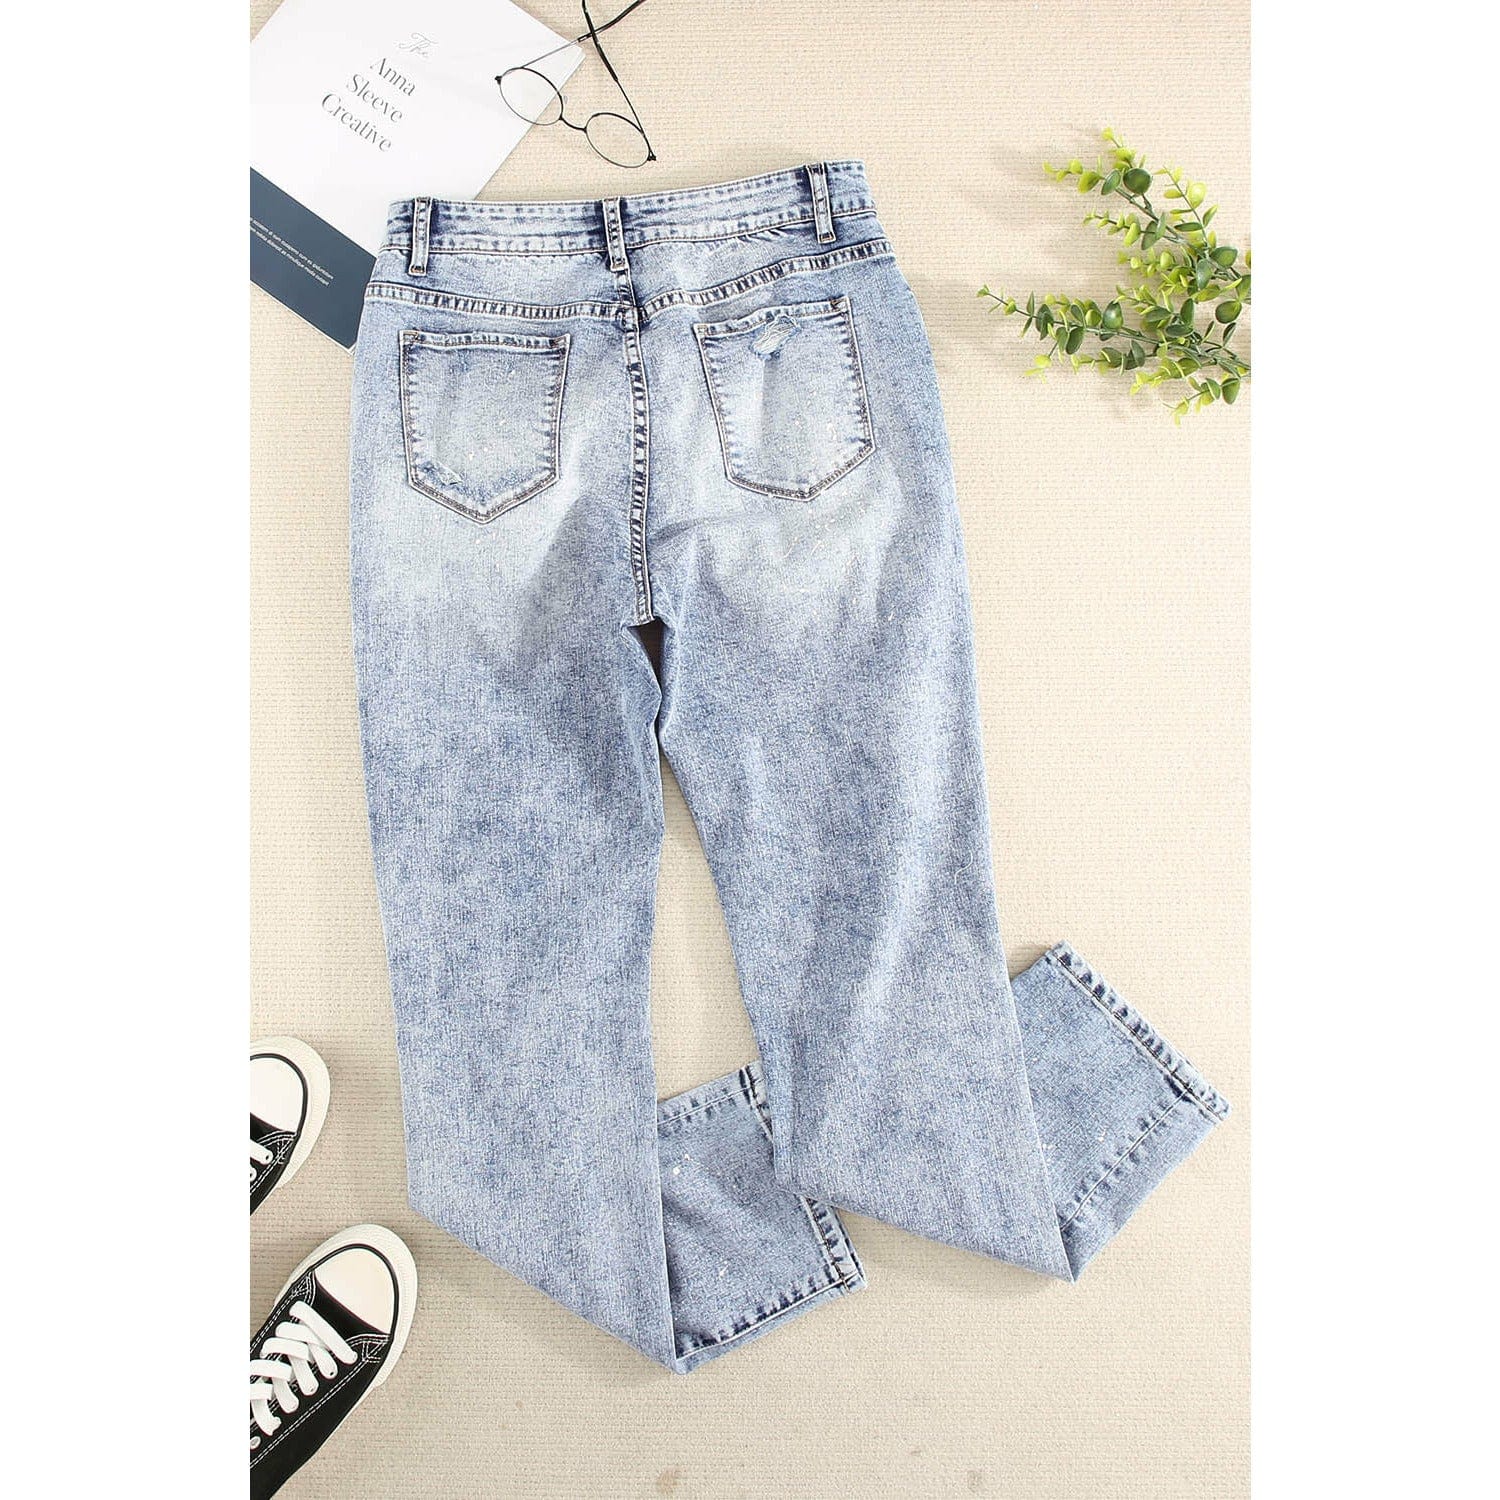 Splatter Distressed Acid Wash Jeans with Pockets - Body By J'ne